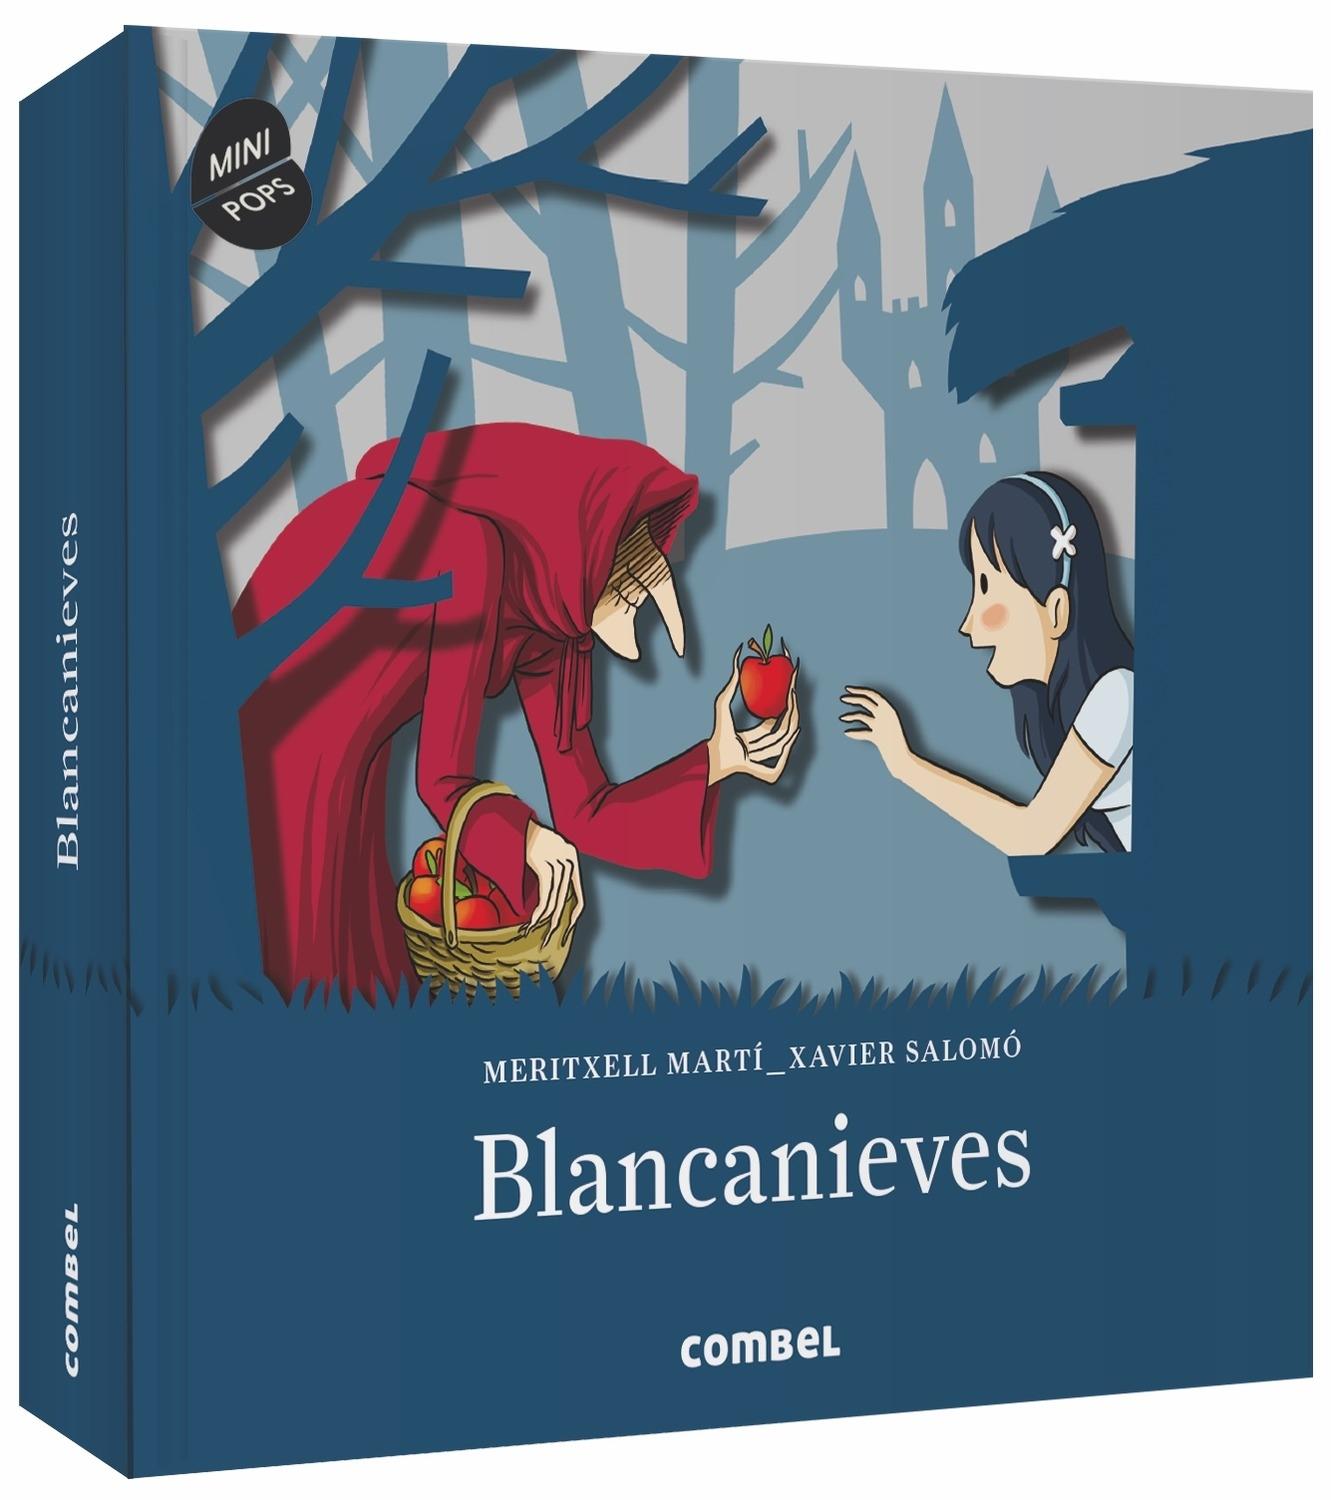 Blancanieves "Mini pops"